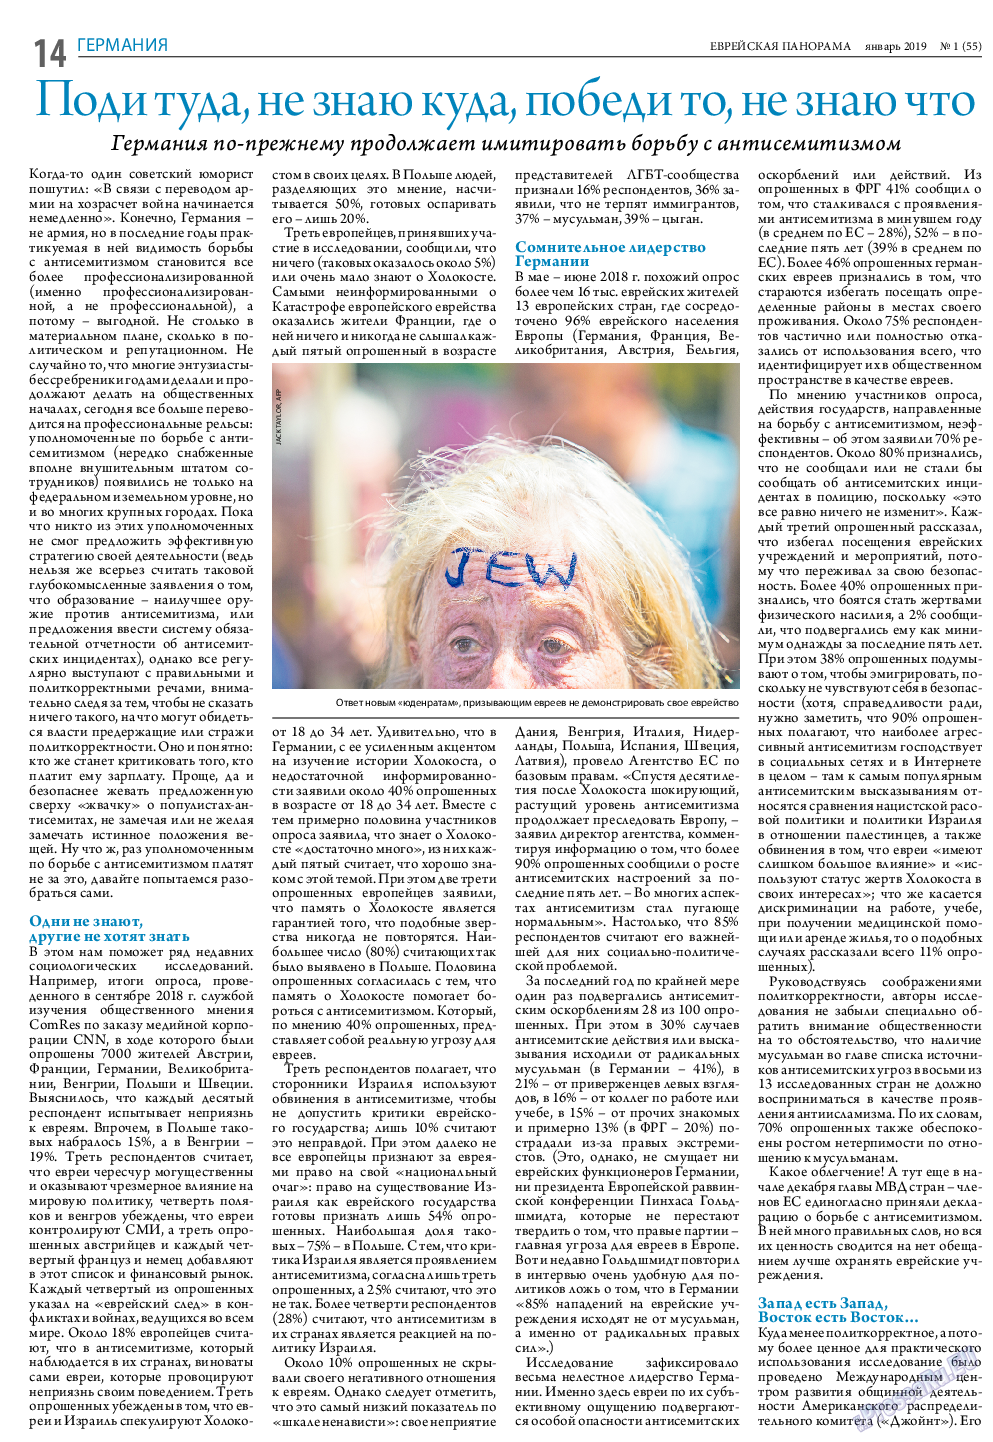 Еврейская панорама, газета. 2019 №1 стр.14